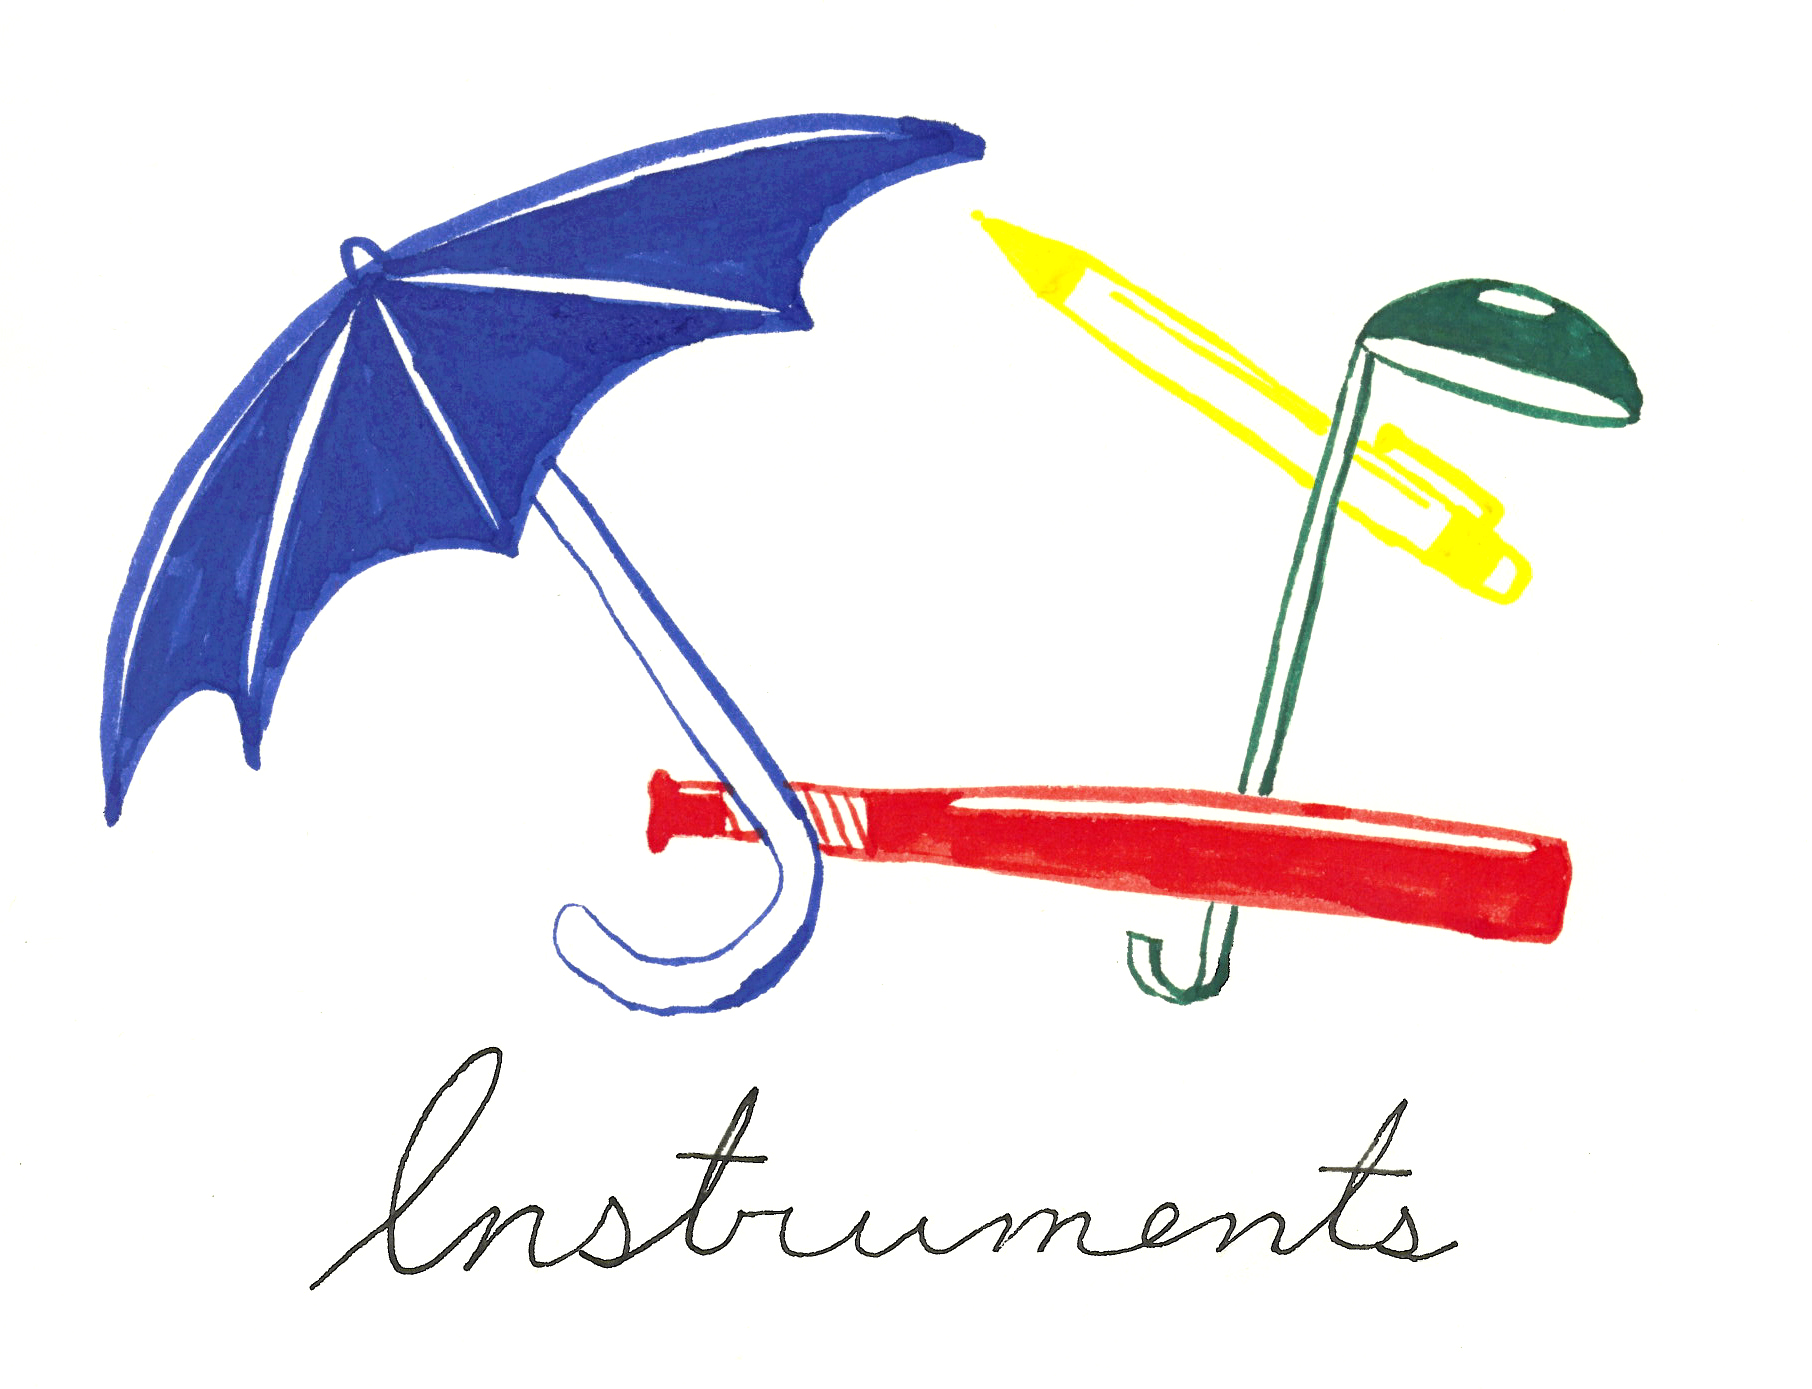 "Instruments"